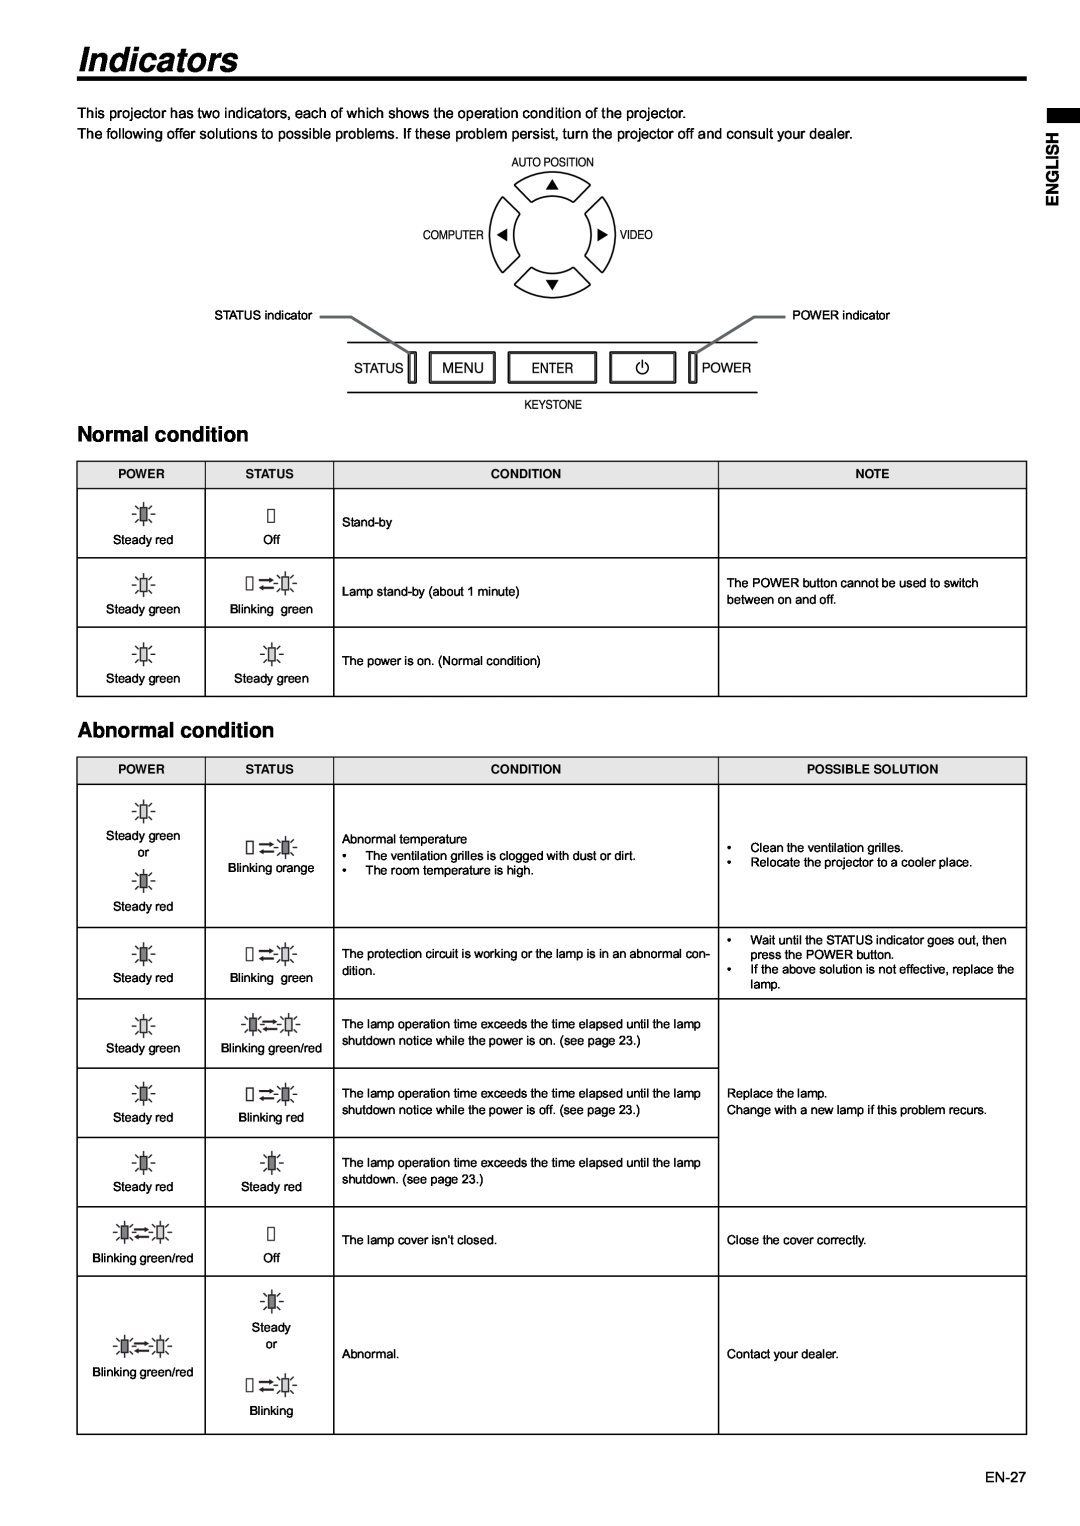 Mitsubishi Electronics XD435U-G user manual Indicators, Normal condition, Abnormal condition 